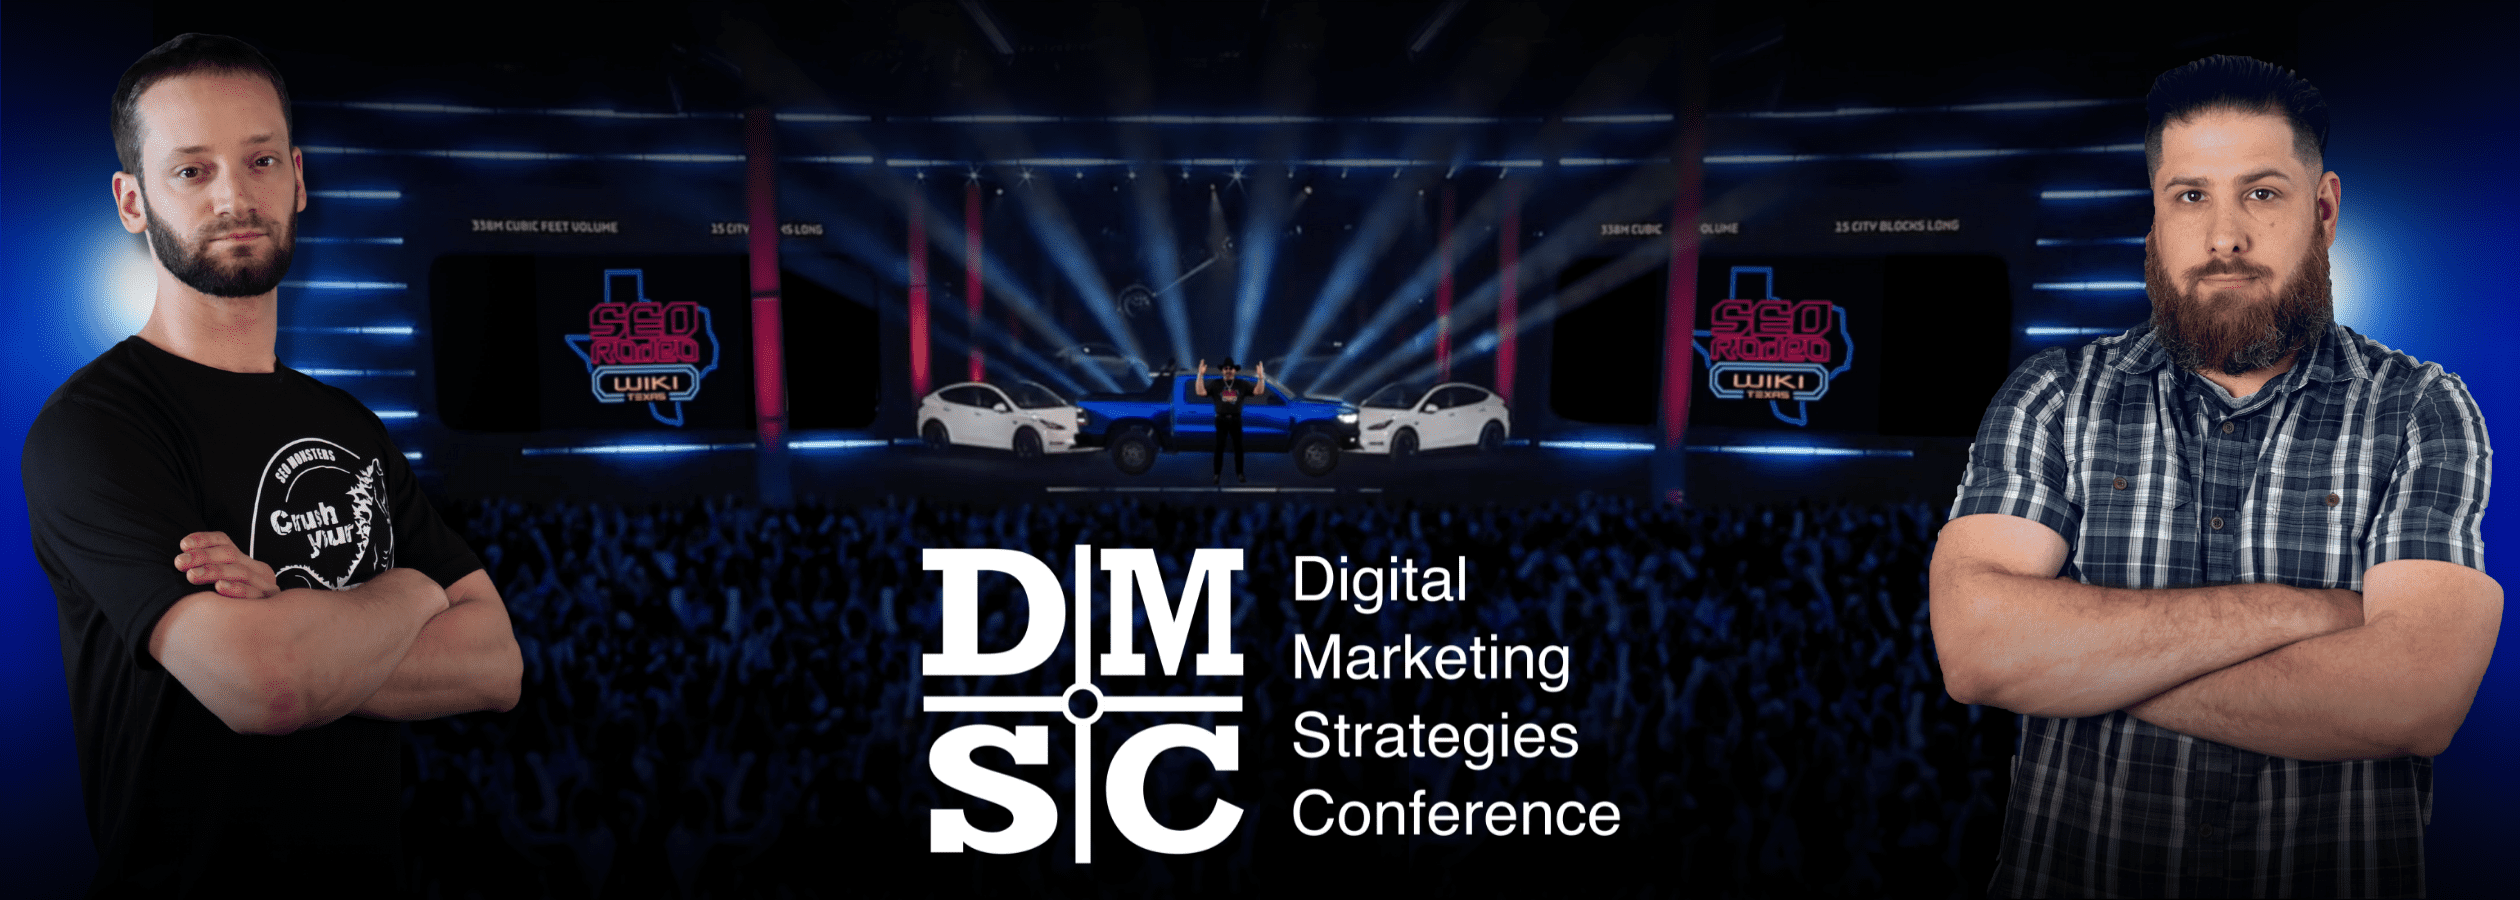 Wikimotive Digital Marketing Strategy Conference